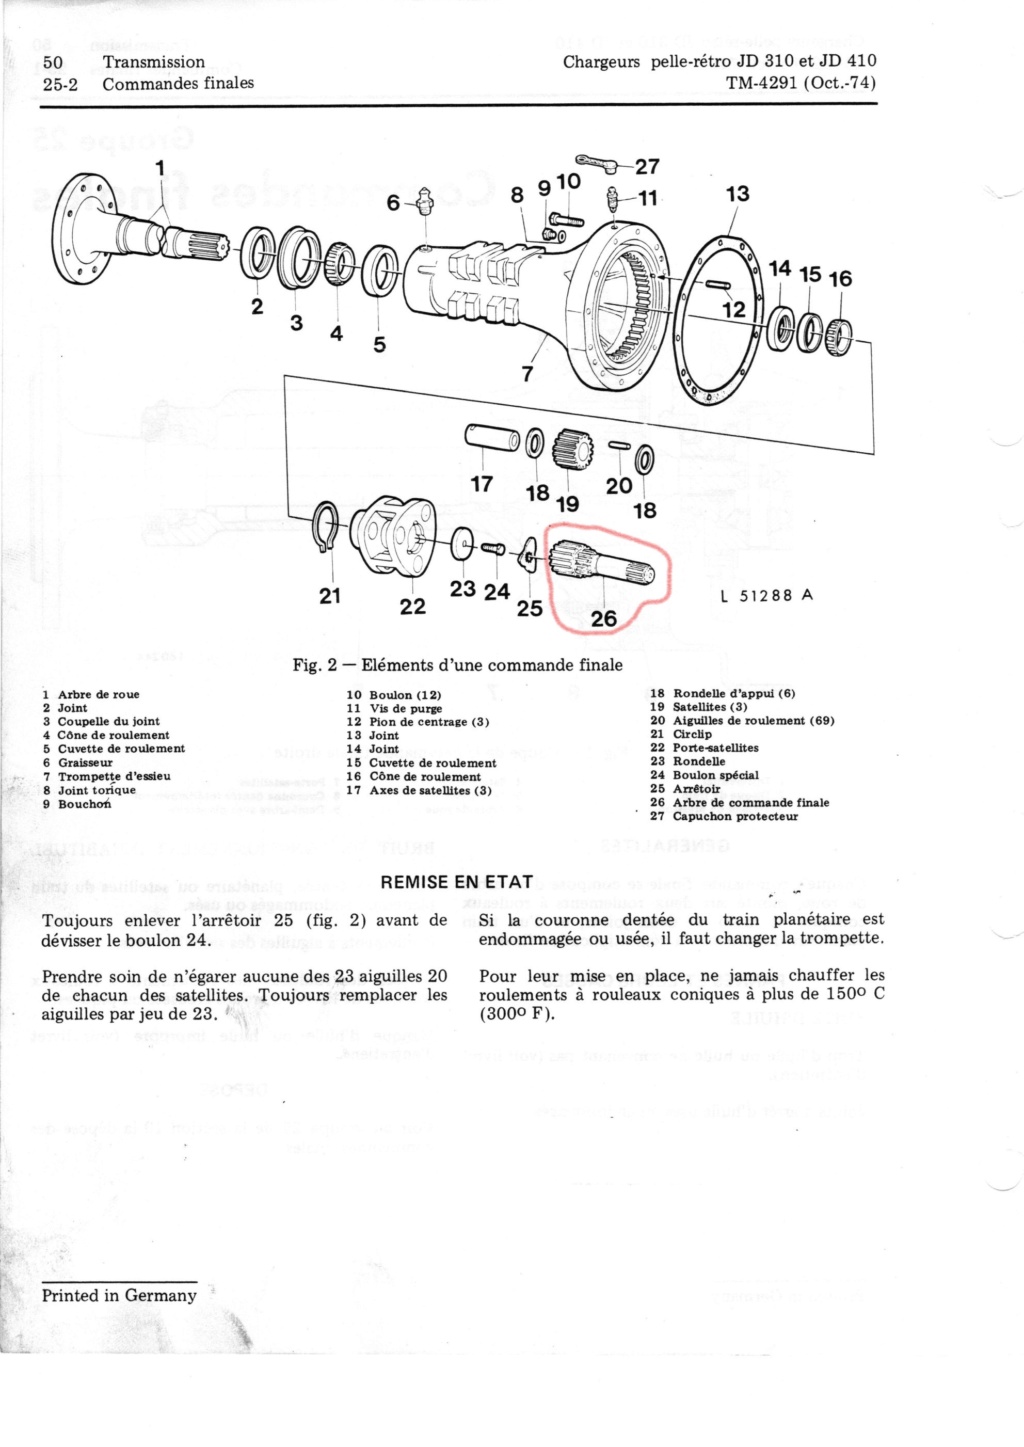 Panne transmission tractopelle JD410 Inkeda10